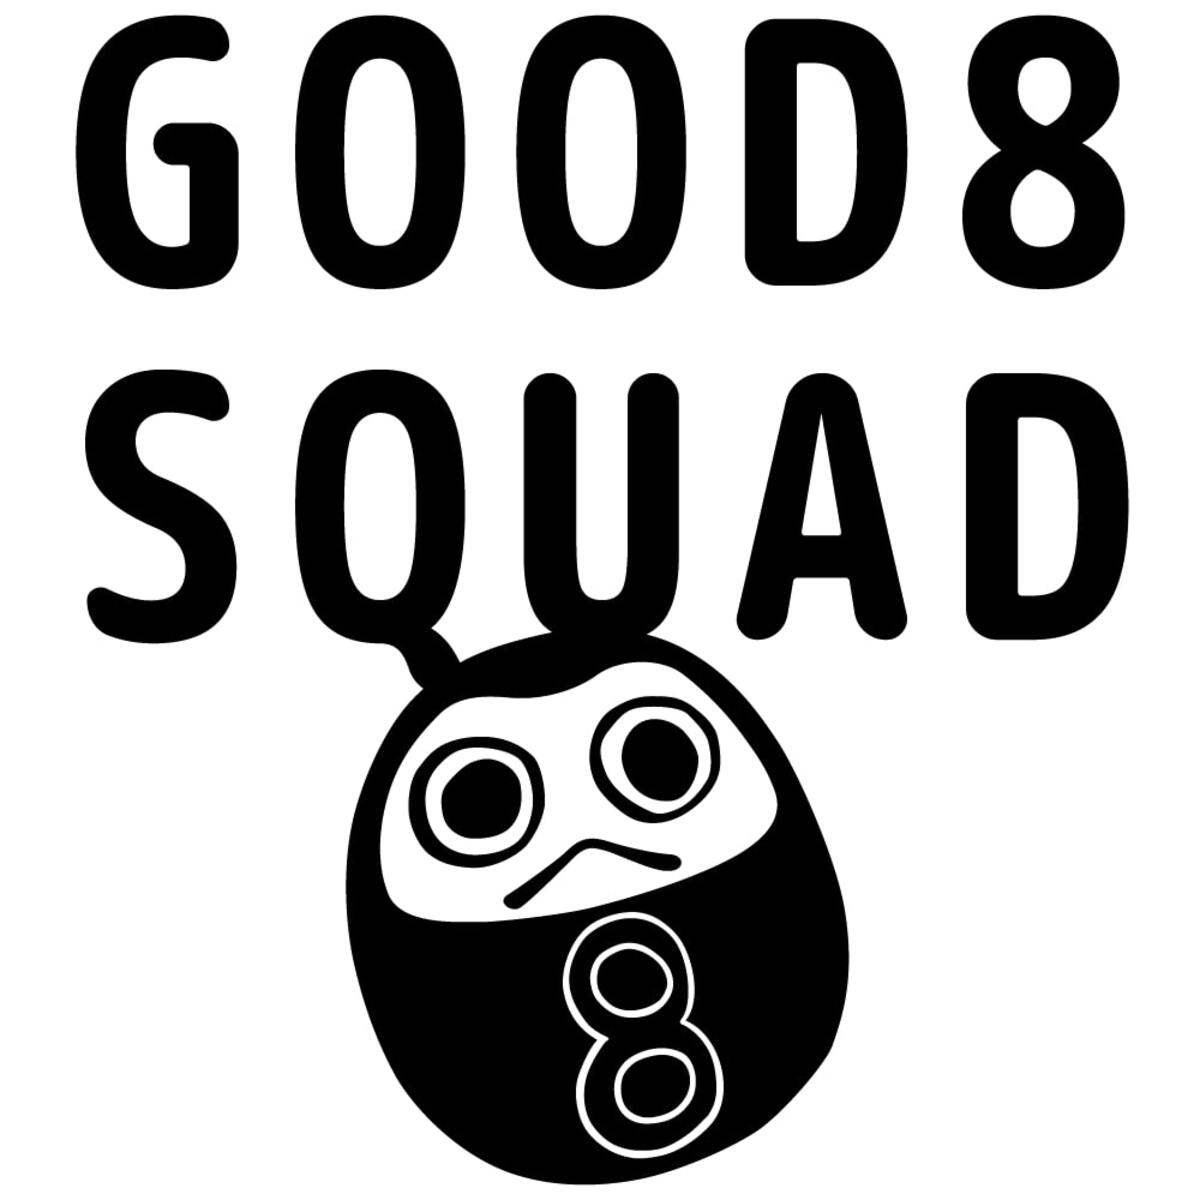 Good 8 Squad